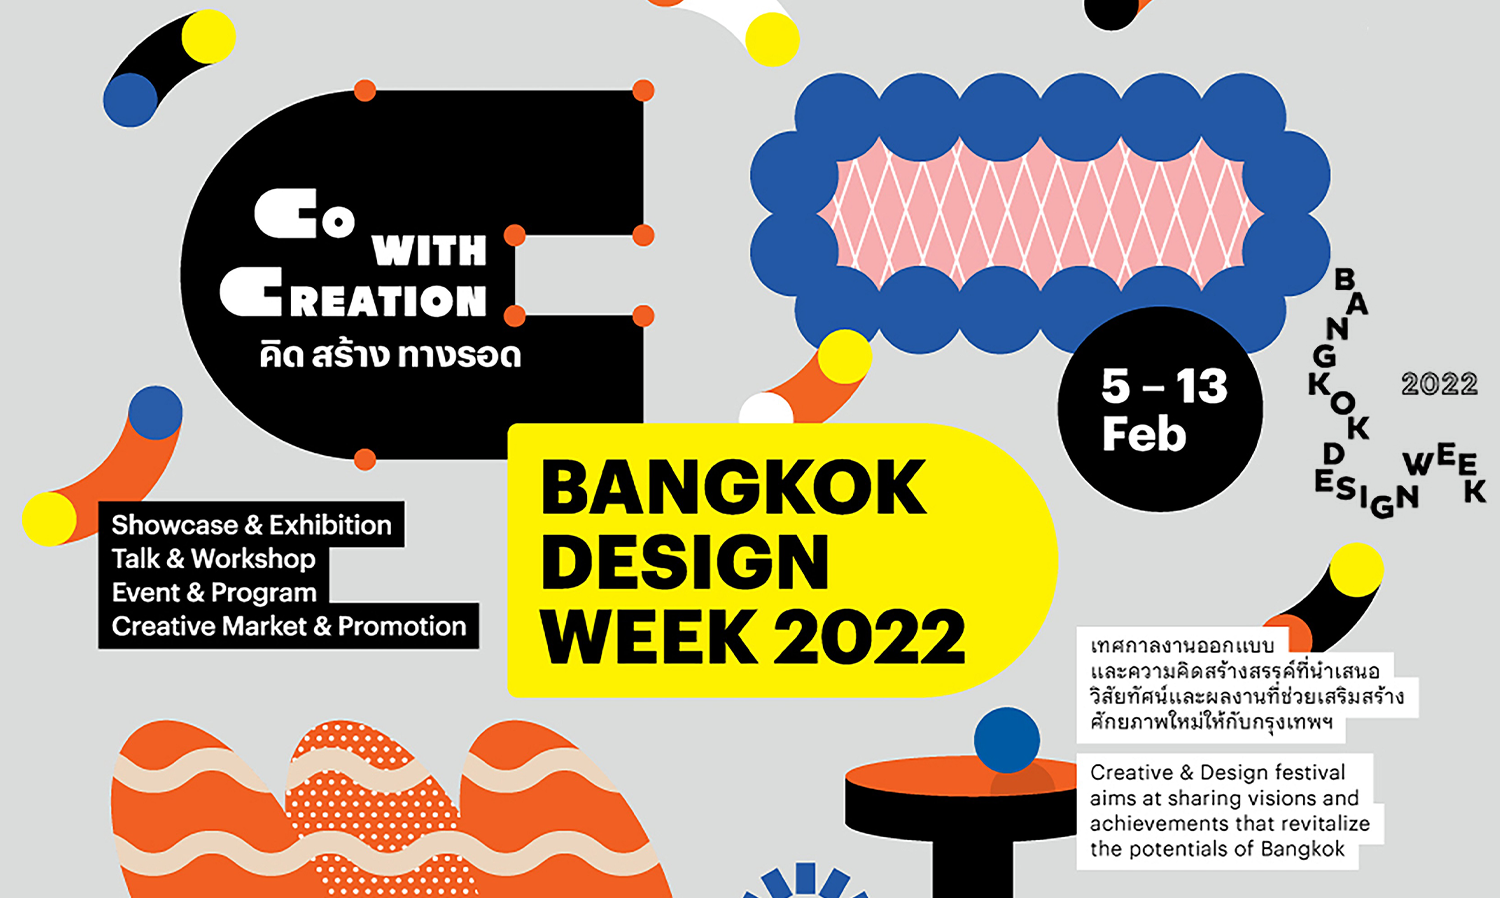 CPAC 3D Printing Solution ในงาน Bangkok Design Week 2022 5-13 ก.พ. นี้ ณ ที่ว่าการไปรษณีย์กลาง เจริญกรุง-ตลาดน้อย